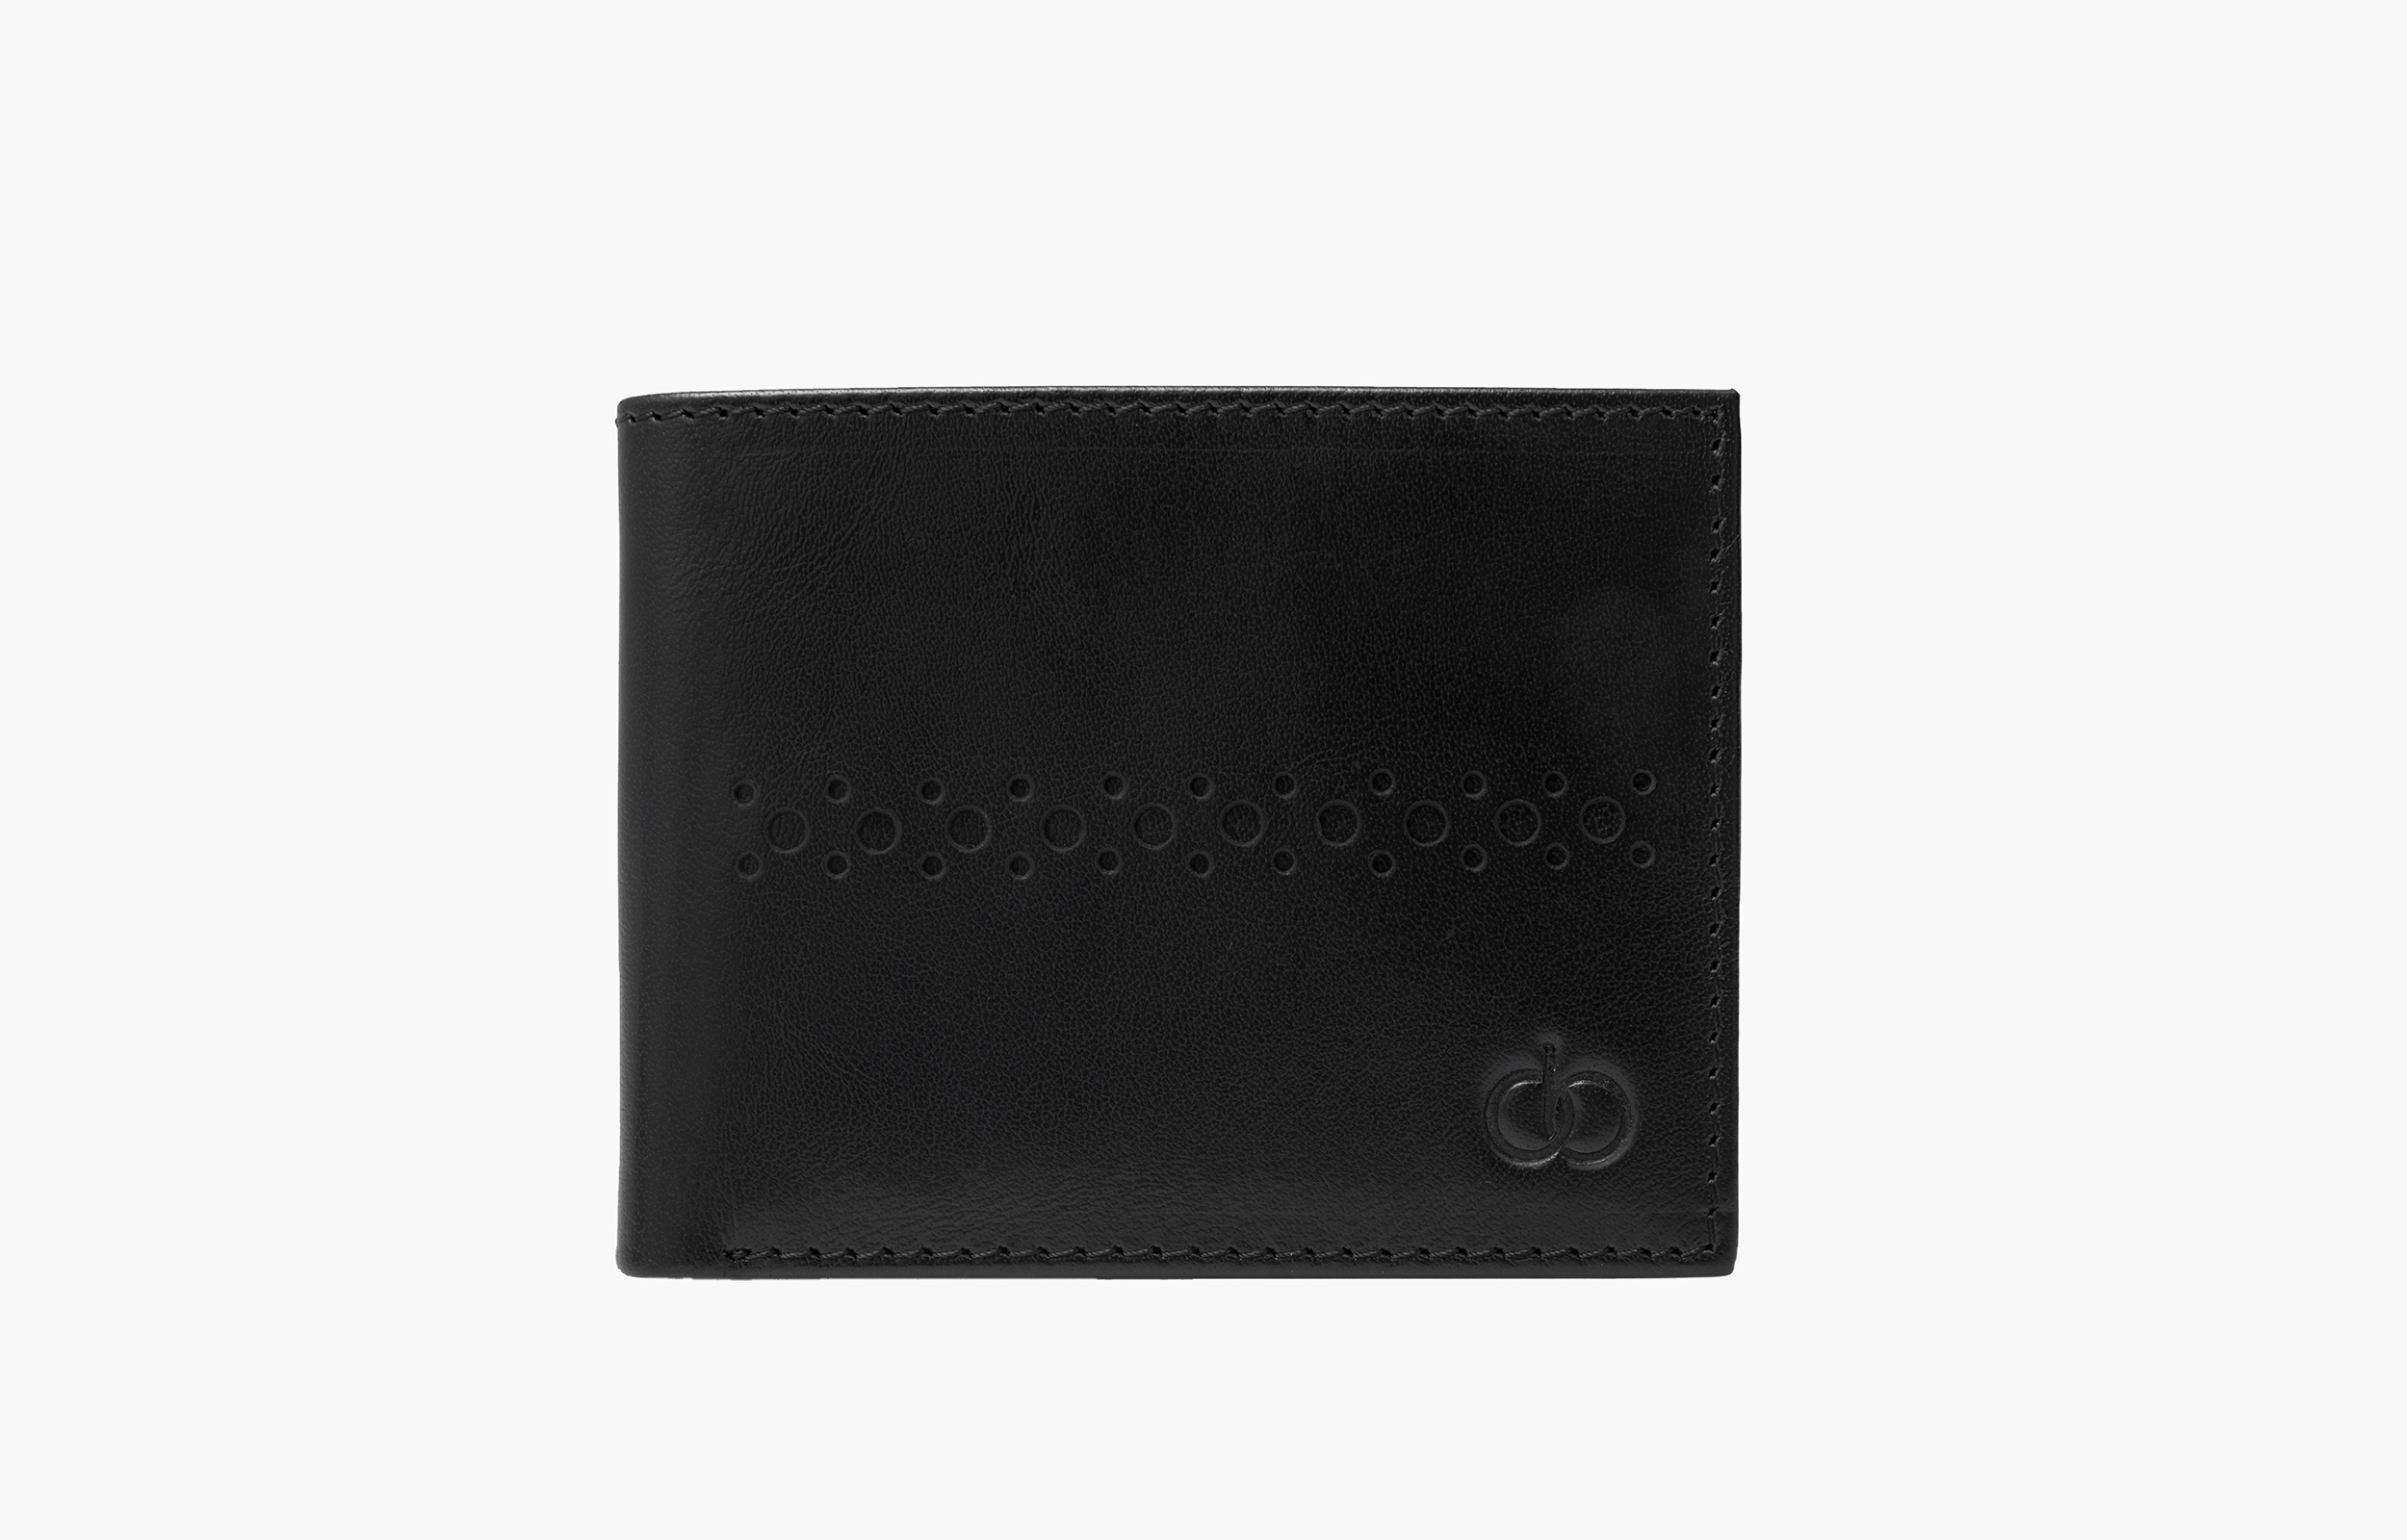 Pluto Midnight Black Leather wallet UK 1